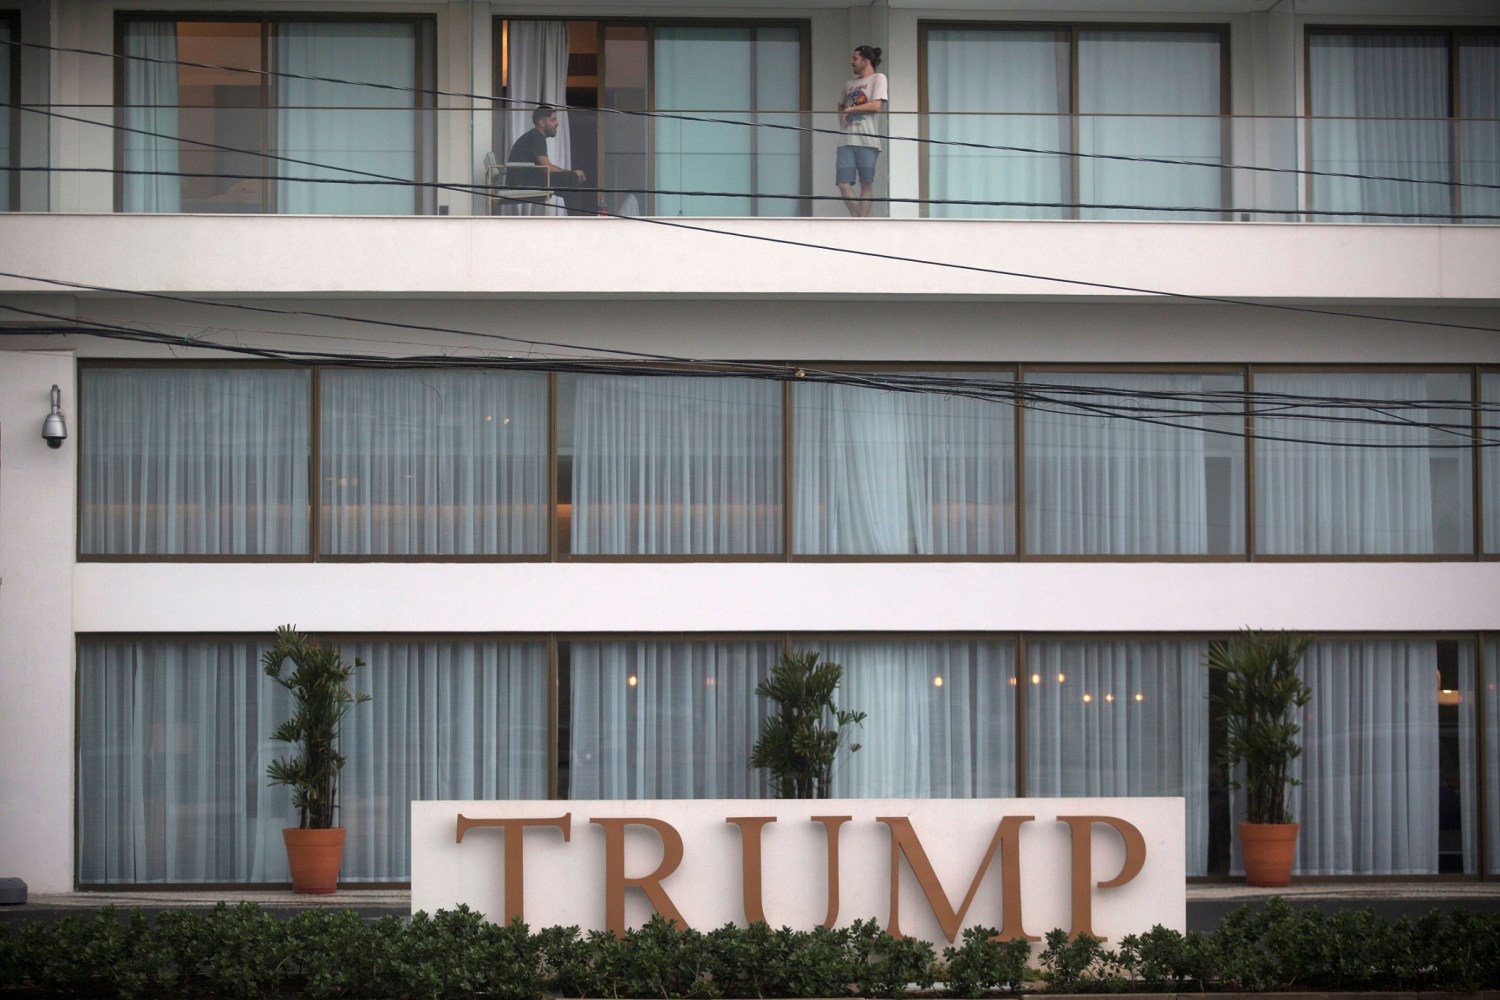 The Trump Hotel Rio de Janeiro is seen in Rio de Janeiro, Brazil, December 14, 2016. REUTERS/Pilar Olivares - RTX2V3BM